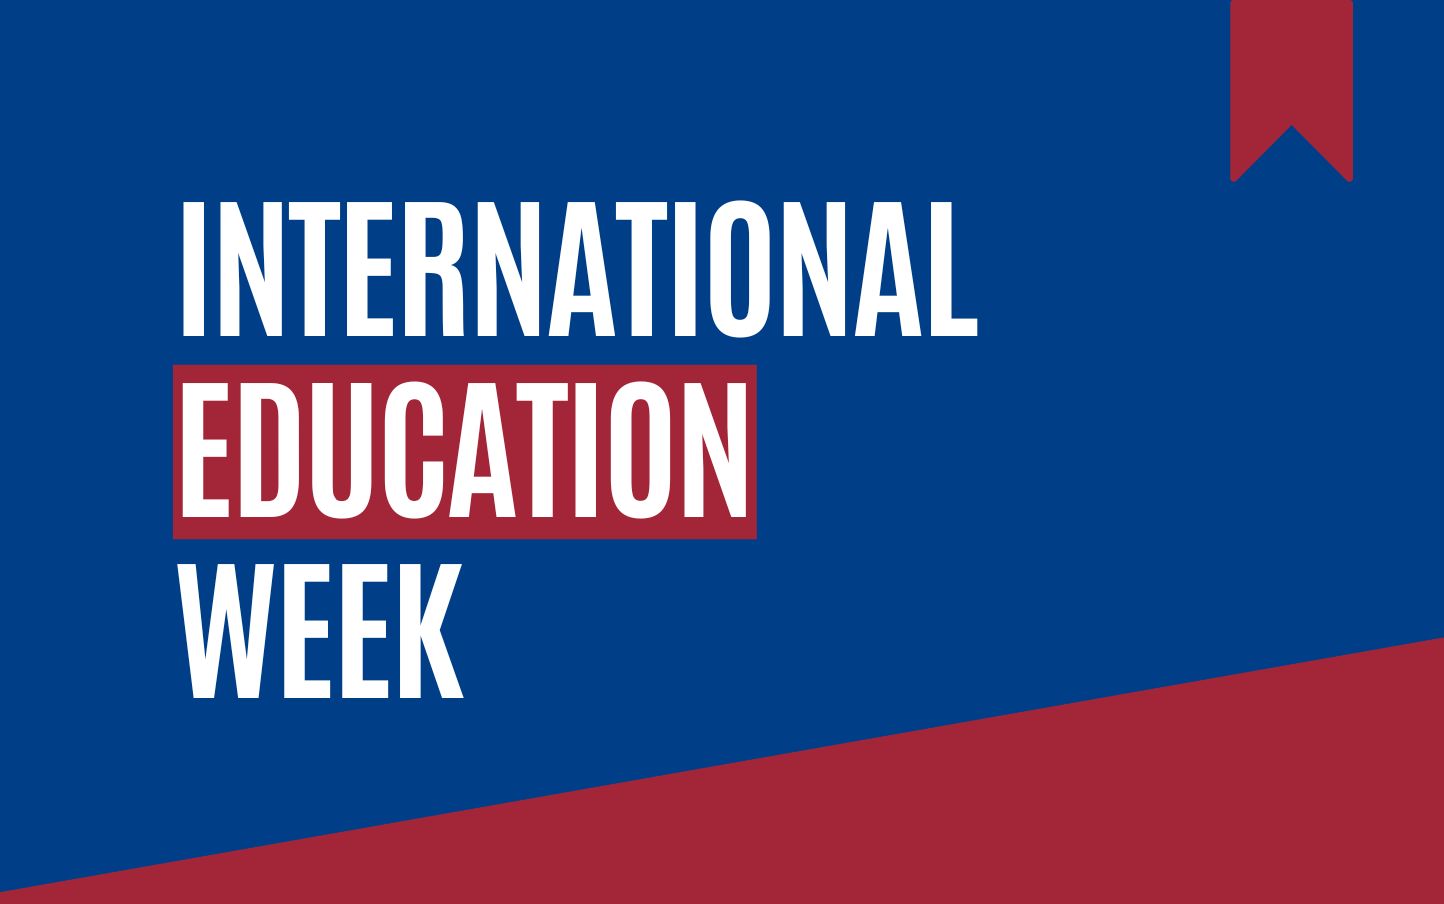 graphic reads "international education week"